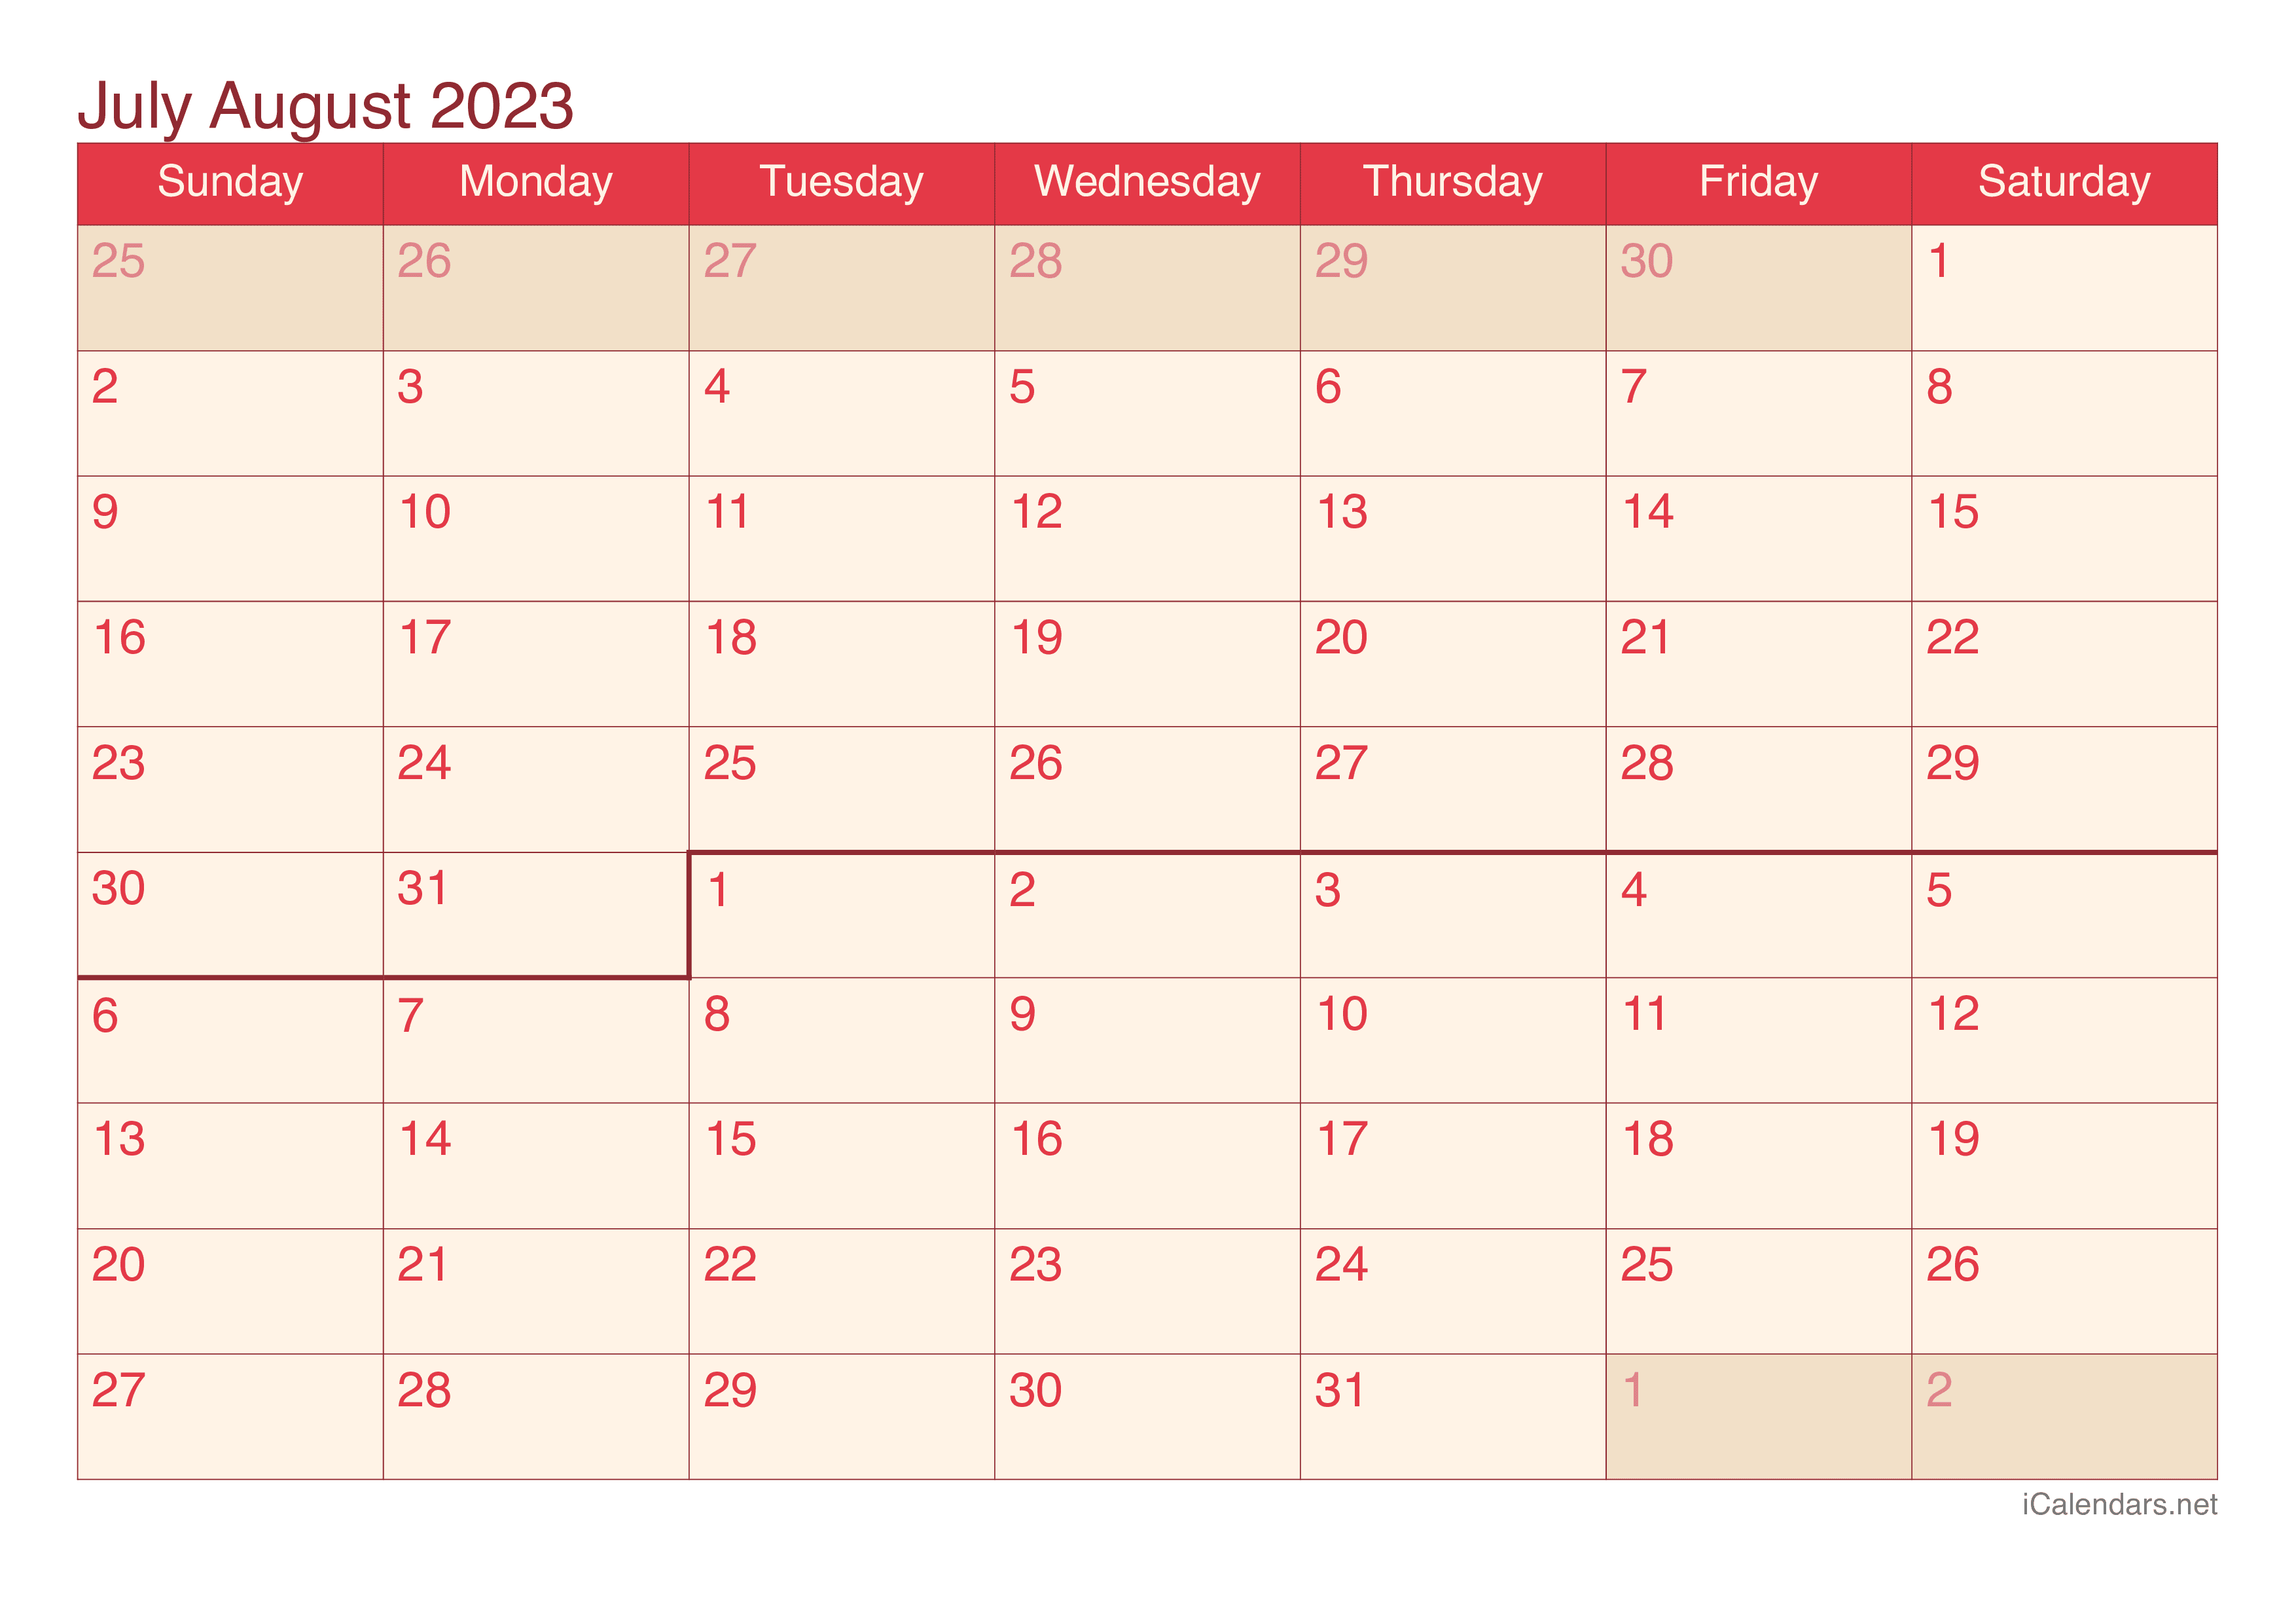 July and August 2023 Printable Calendar - icalendars.net